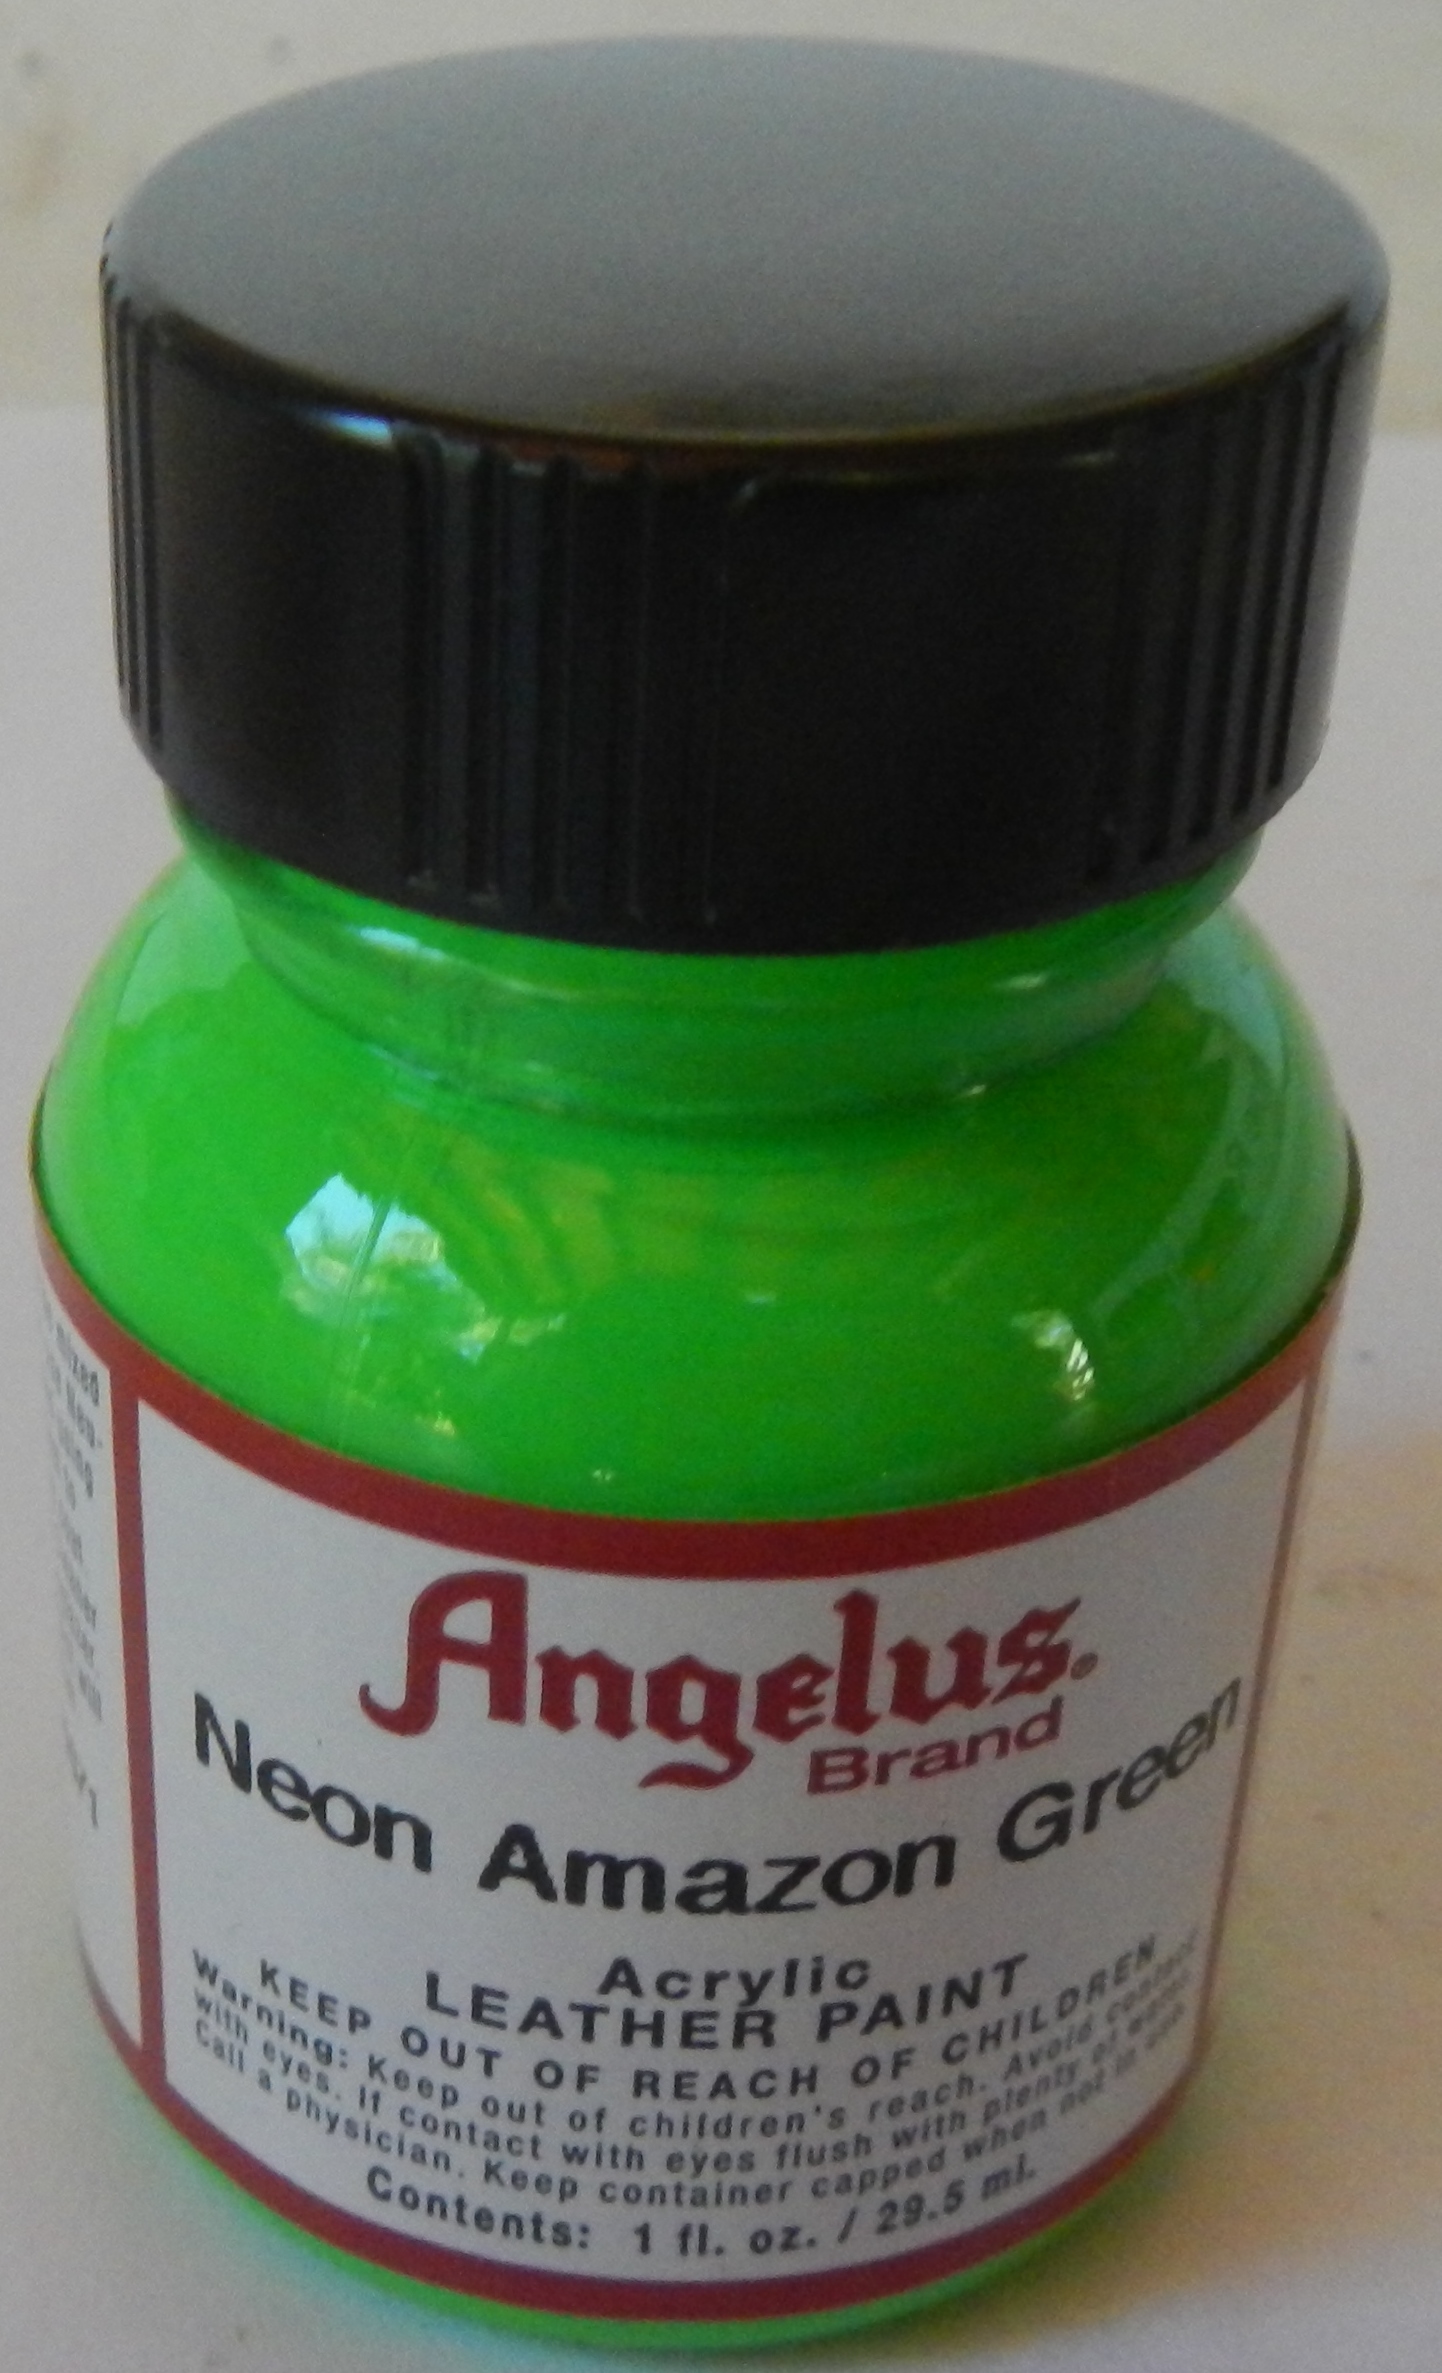 Angelus Neon Amazon Green